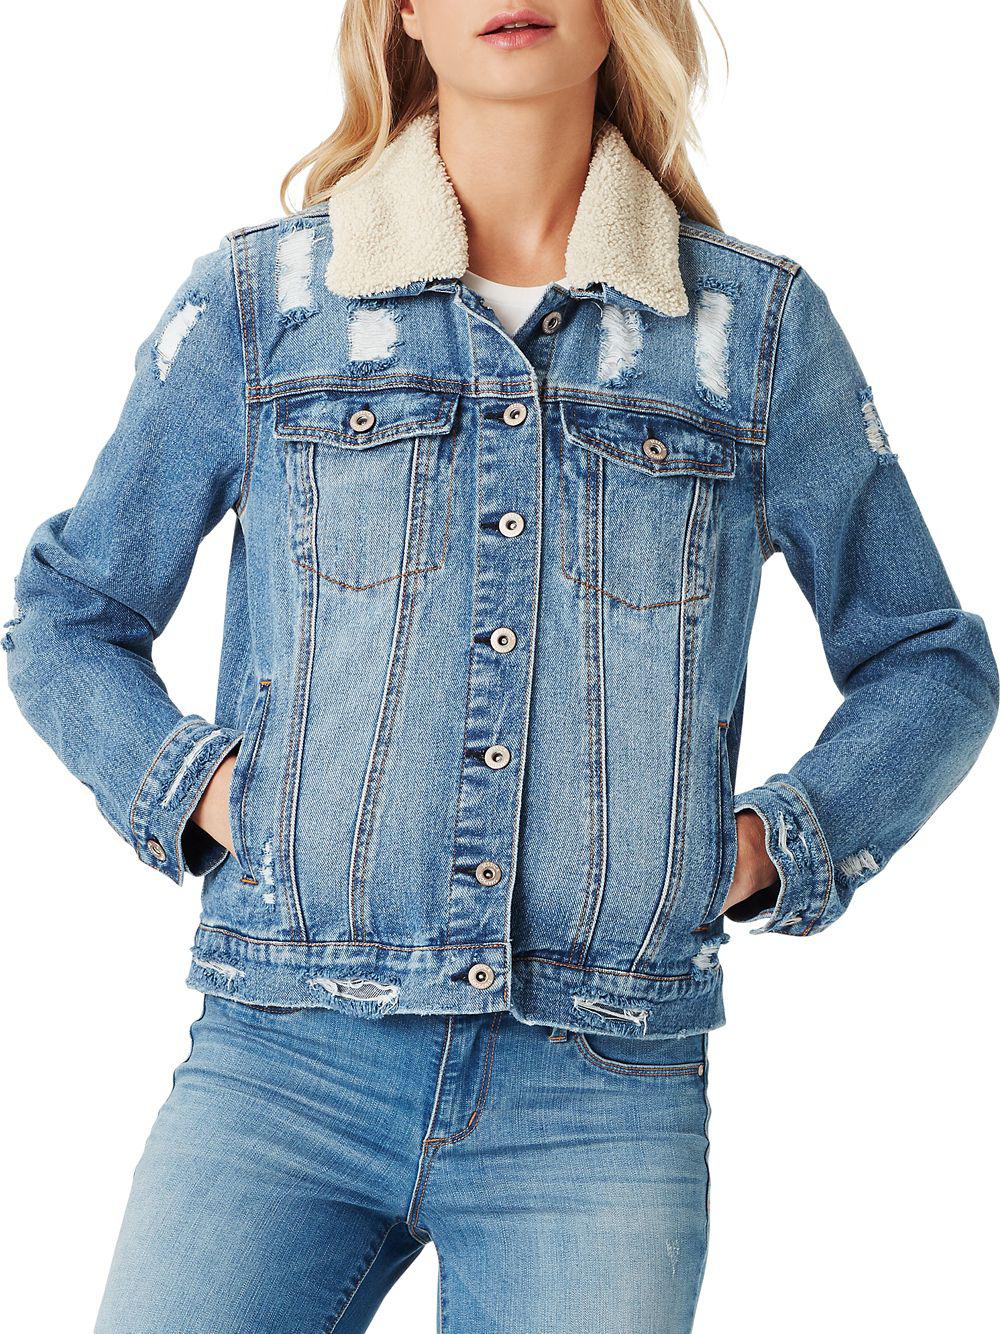 Jessica Simpson Sherpa Denim Jacket in Blue - Lyst